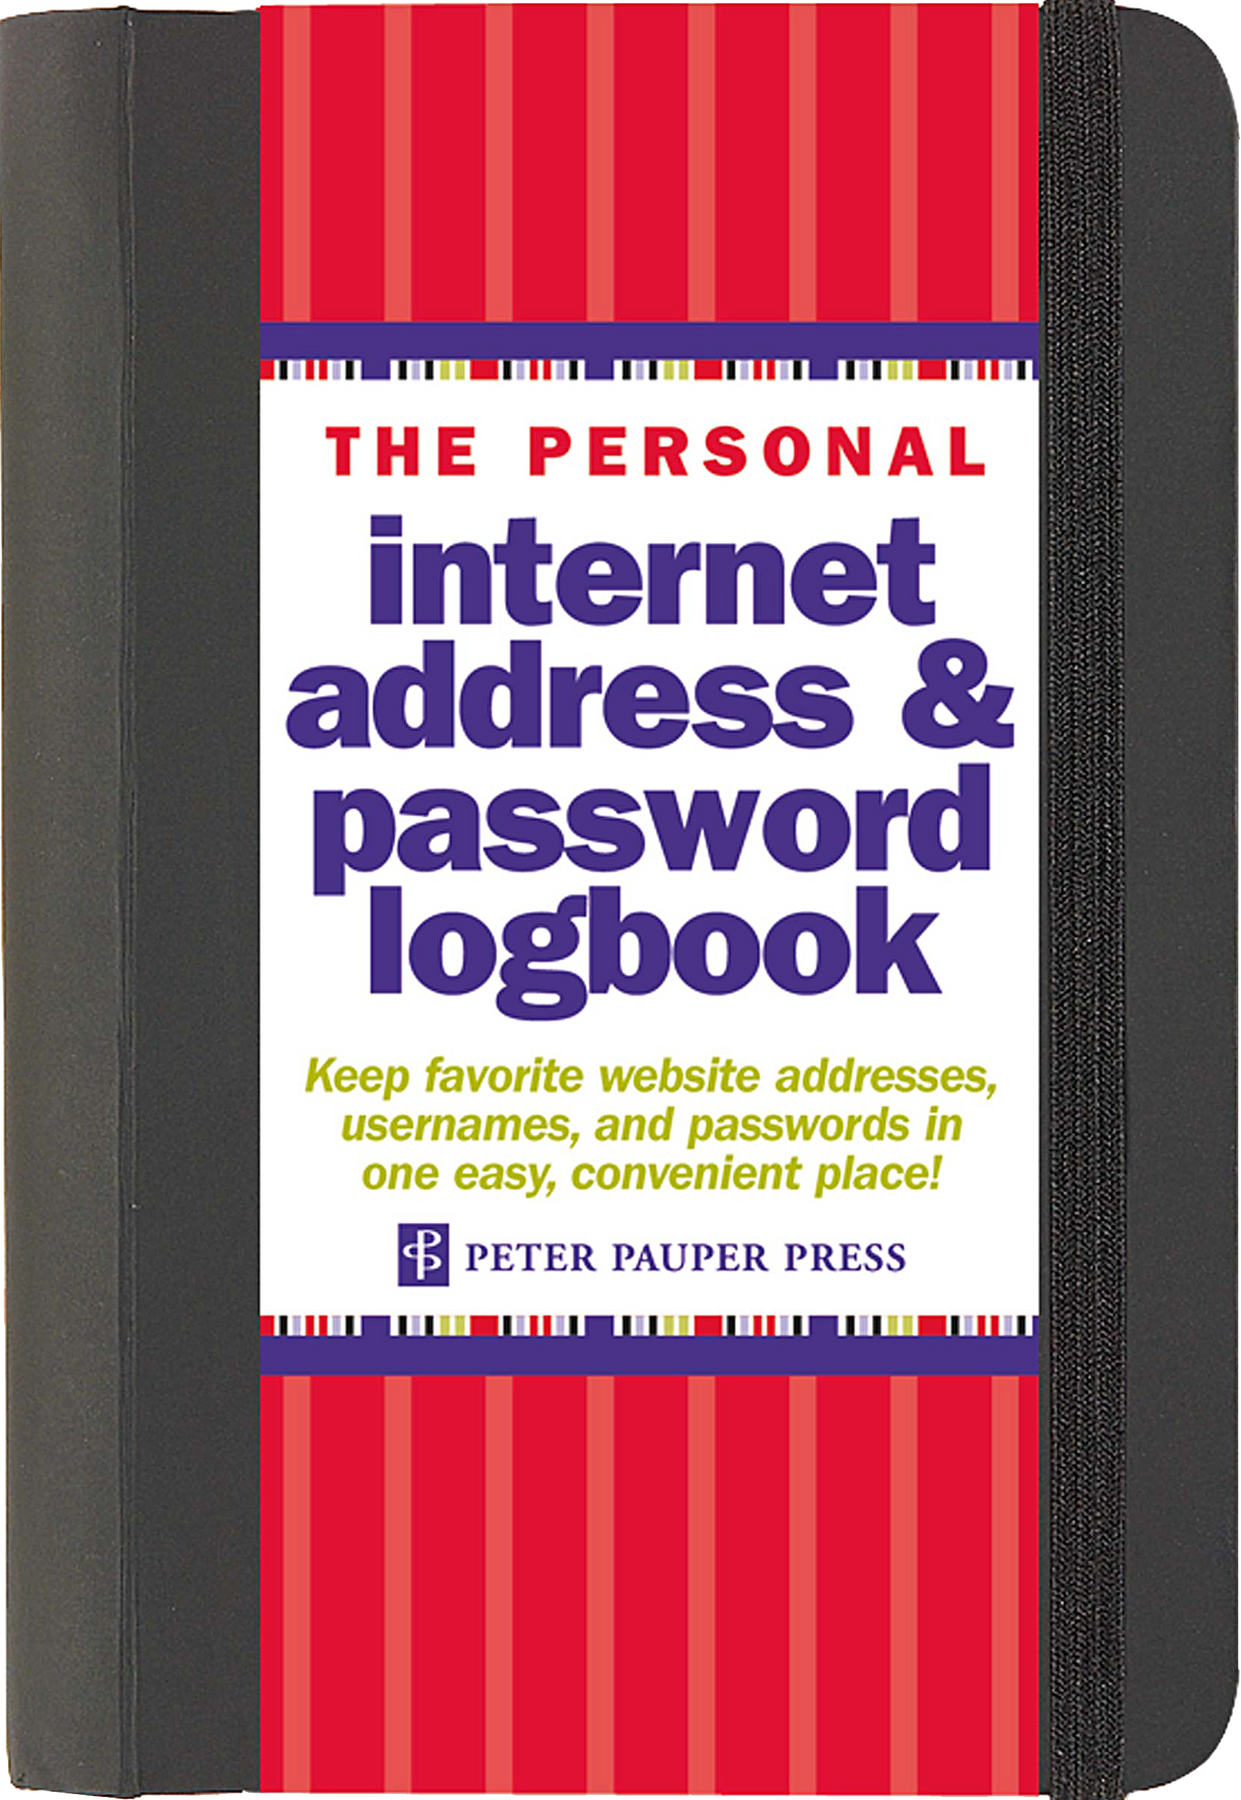 The Personal Internet Address & Password Logbook (Black)